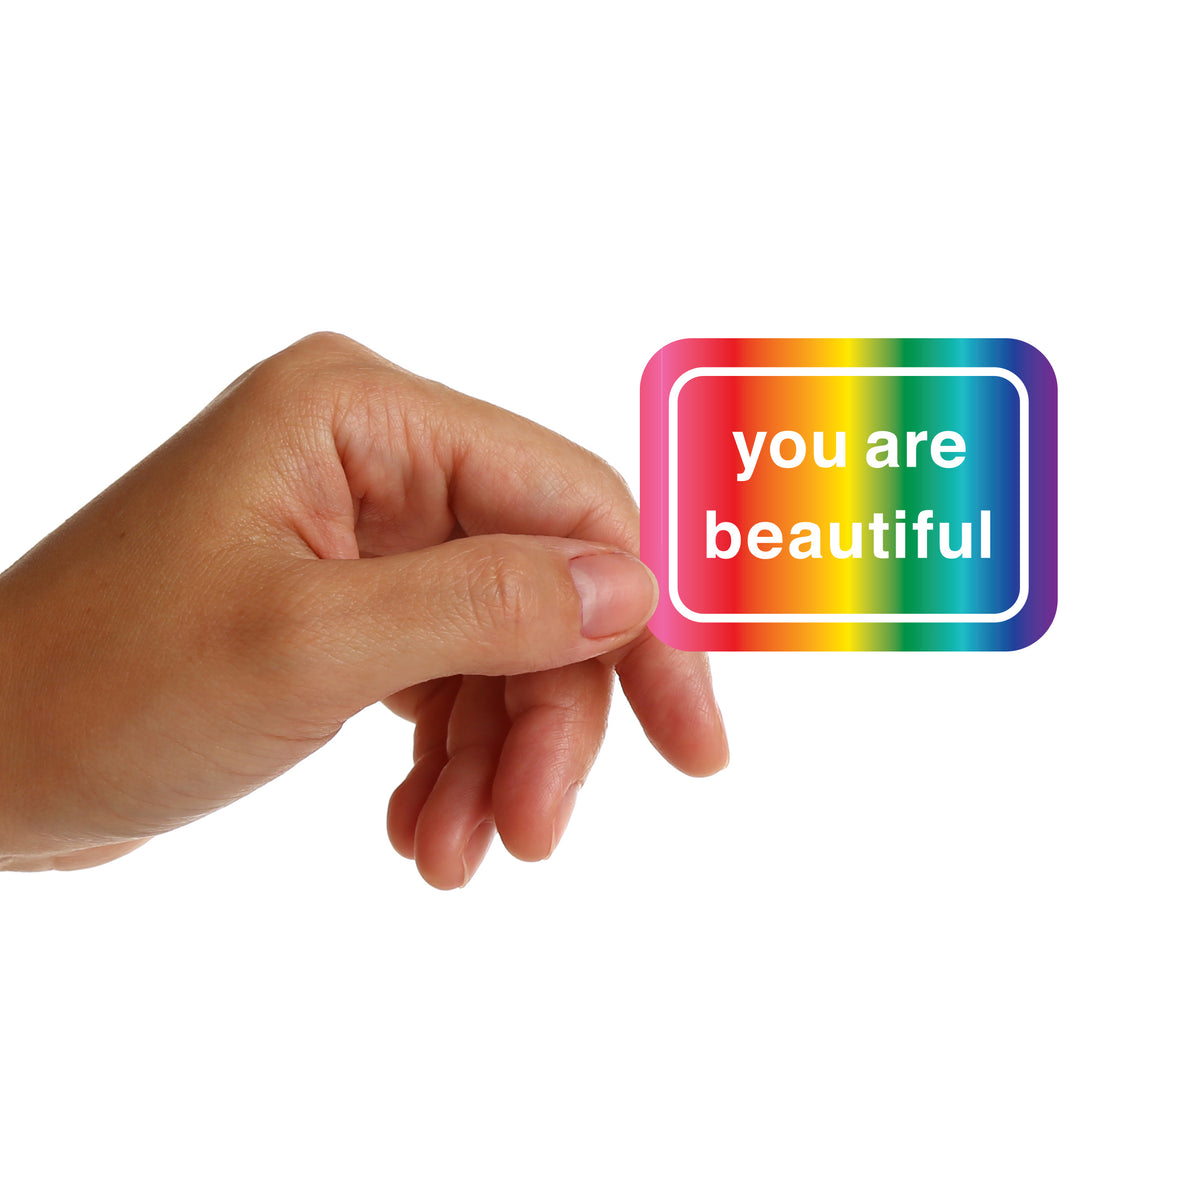 Cute Rainbow Stickers Clipart Graphic by SugarPlum · Creative Fabrica